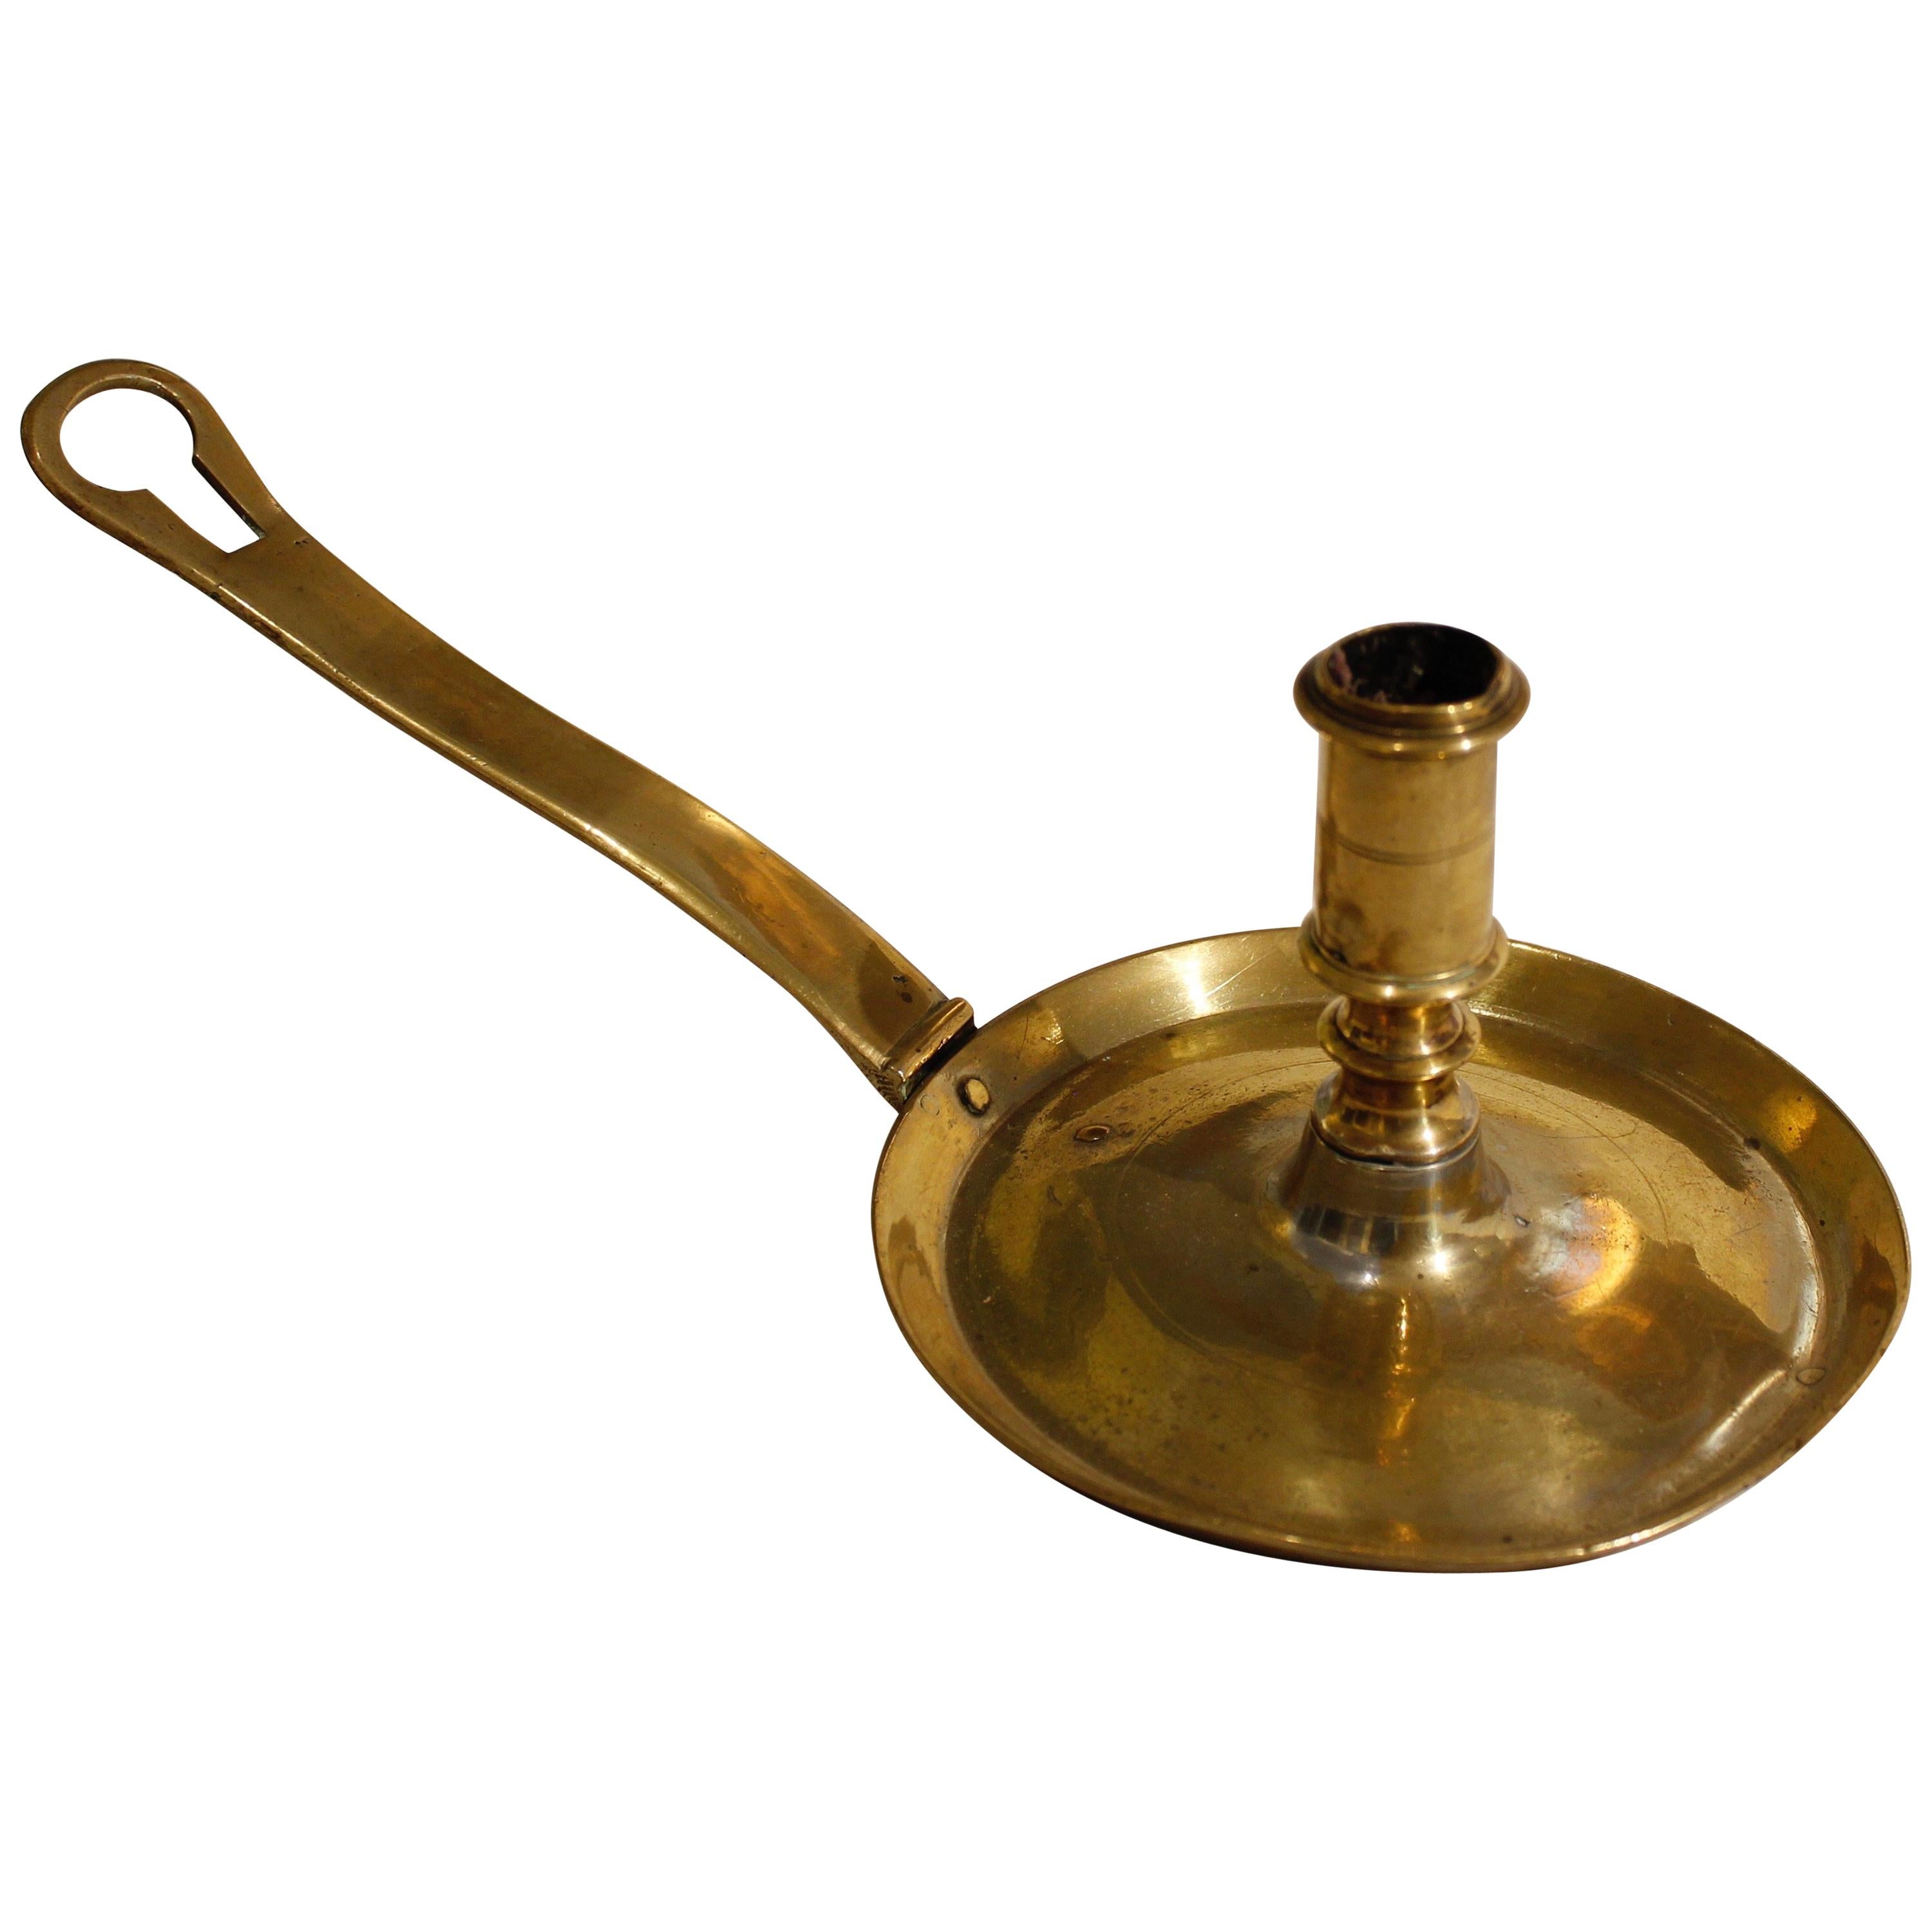 Spanischer Frying Pan Stick aus Messing aus dem 18. Jahrhundert